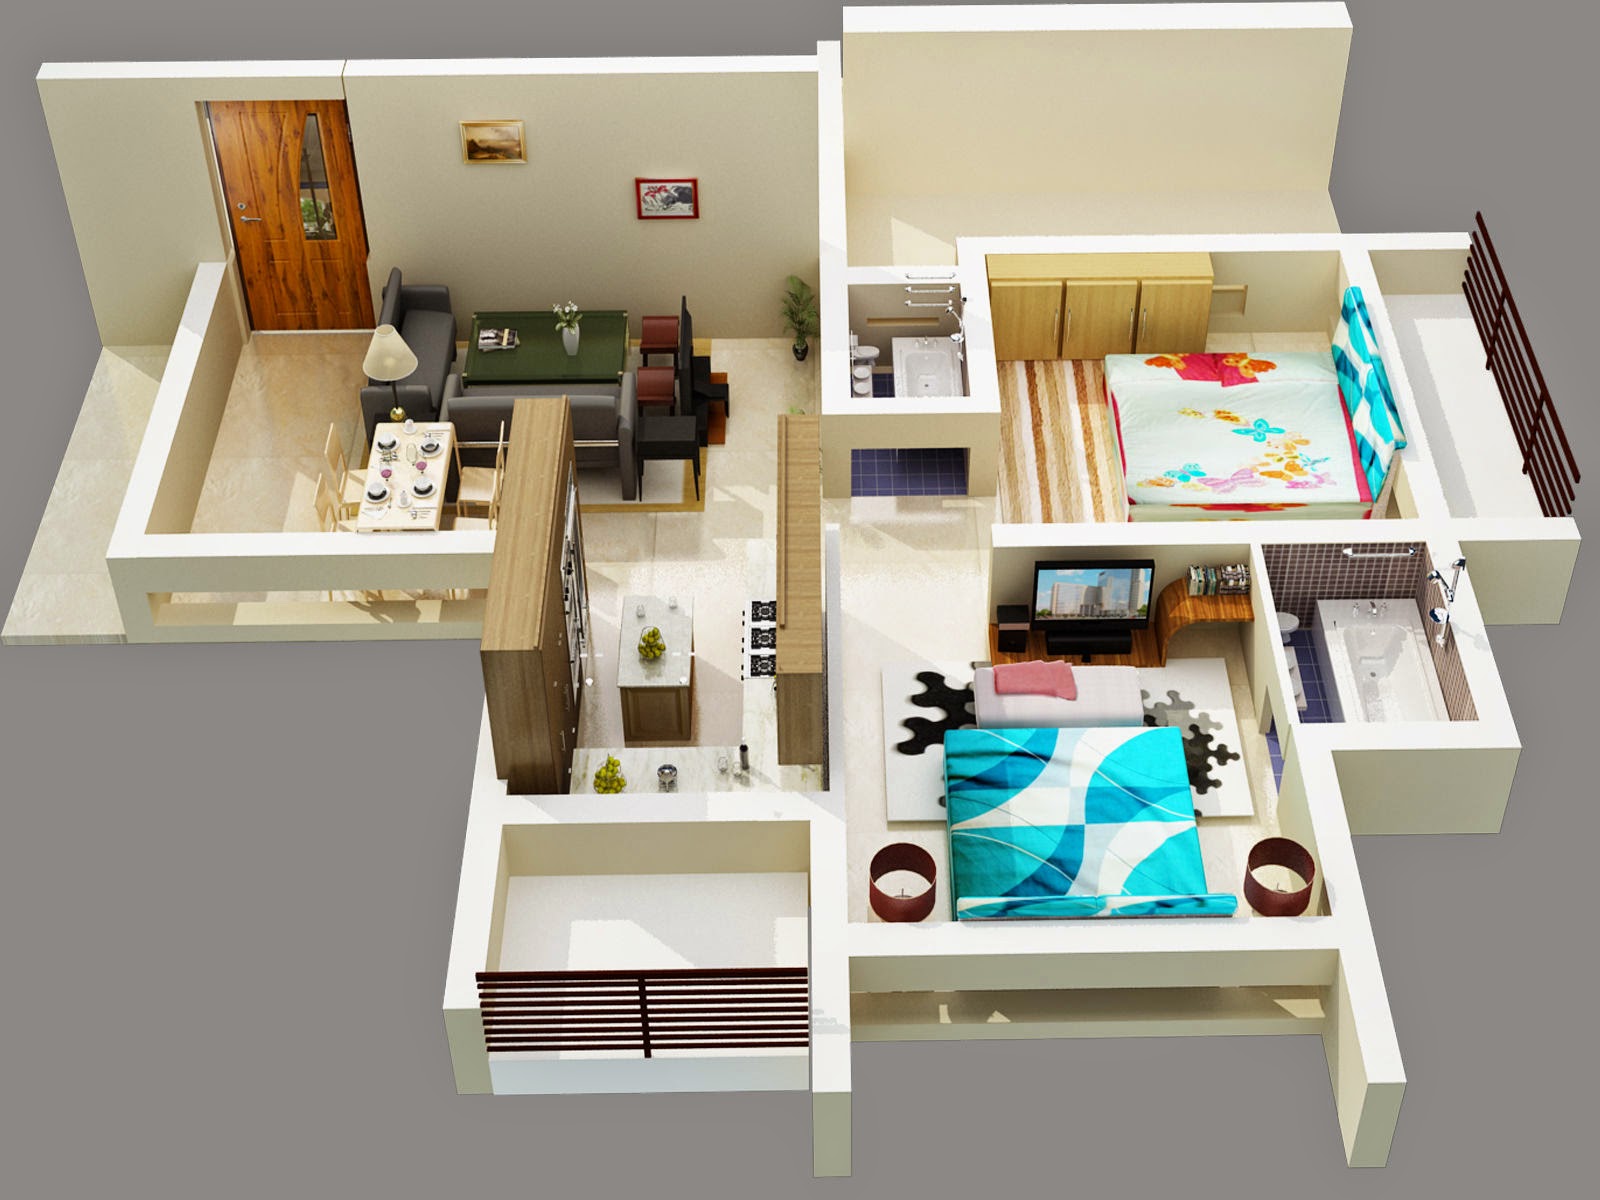 Two bedroom flat. Планировка квартиры. Проектирование квартиры. Макет квартиры сверху. 3д планировка квартиры.